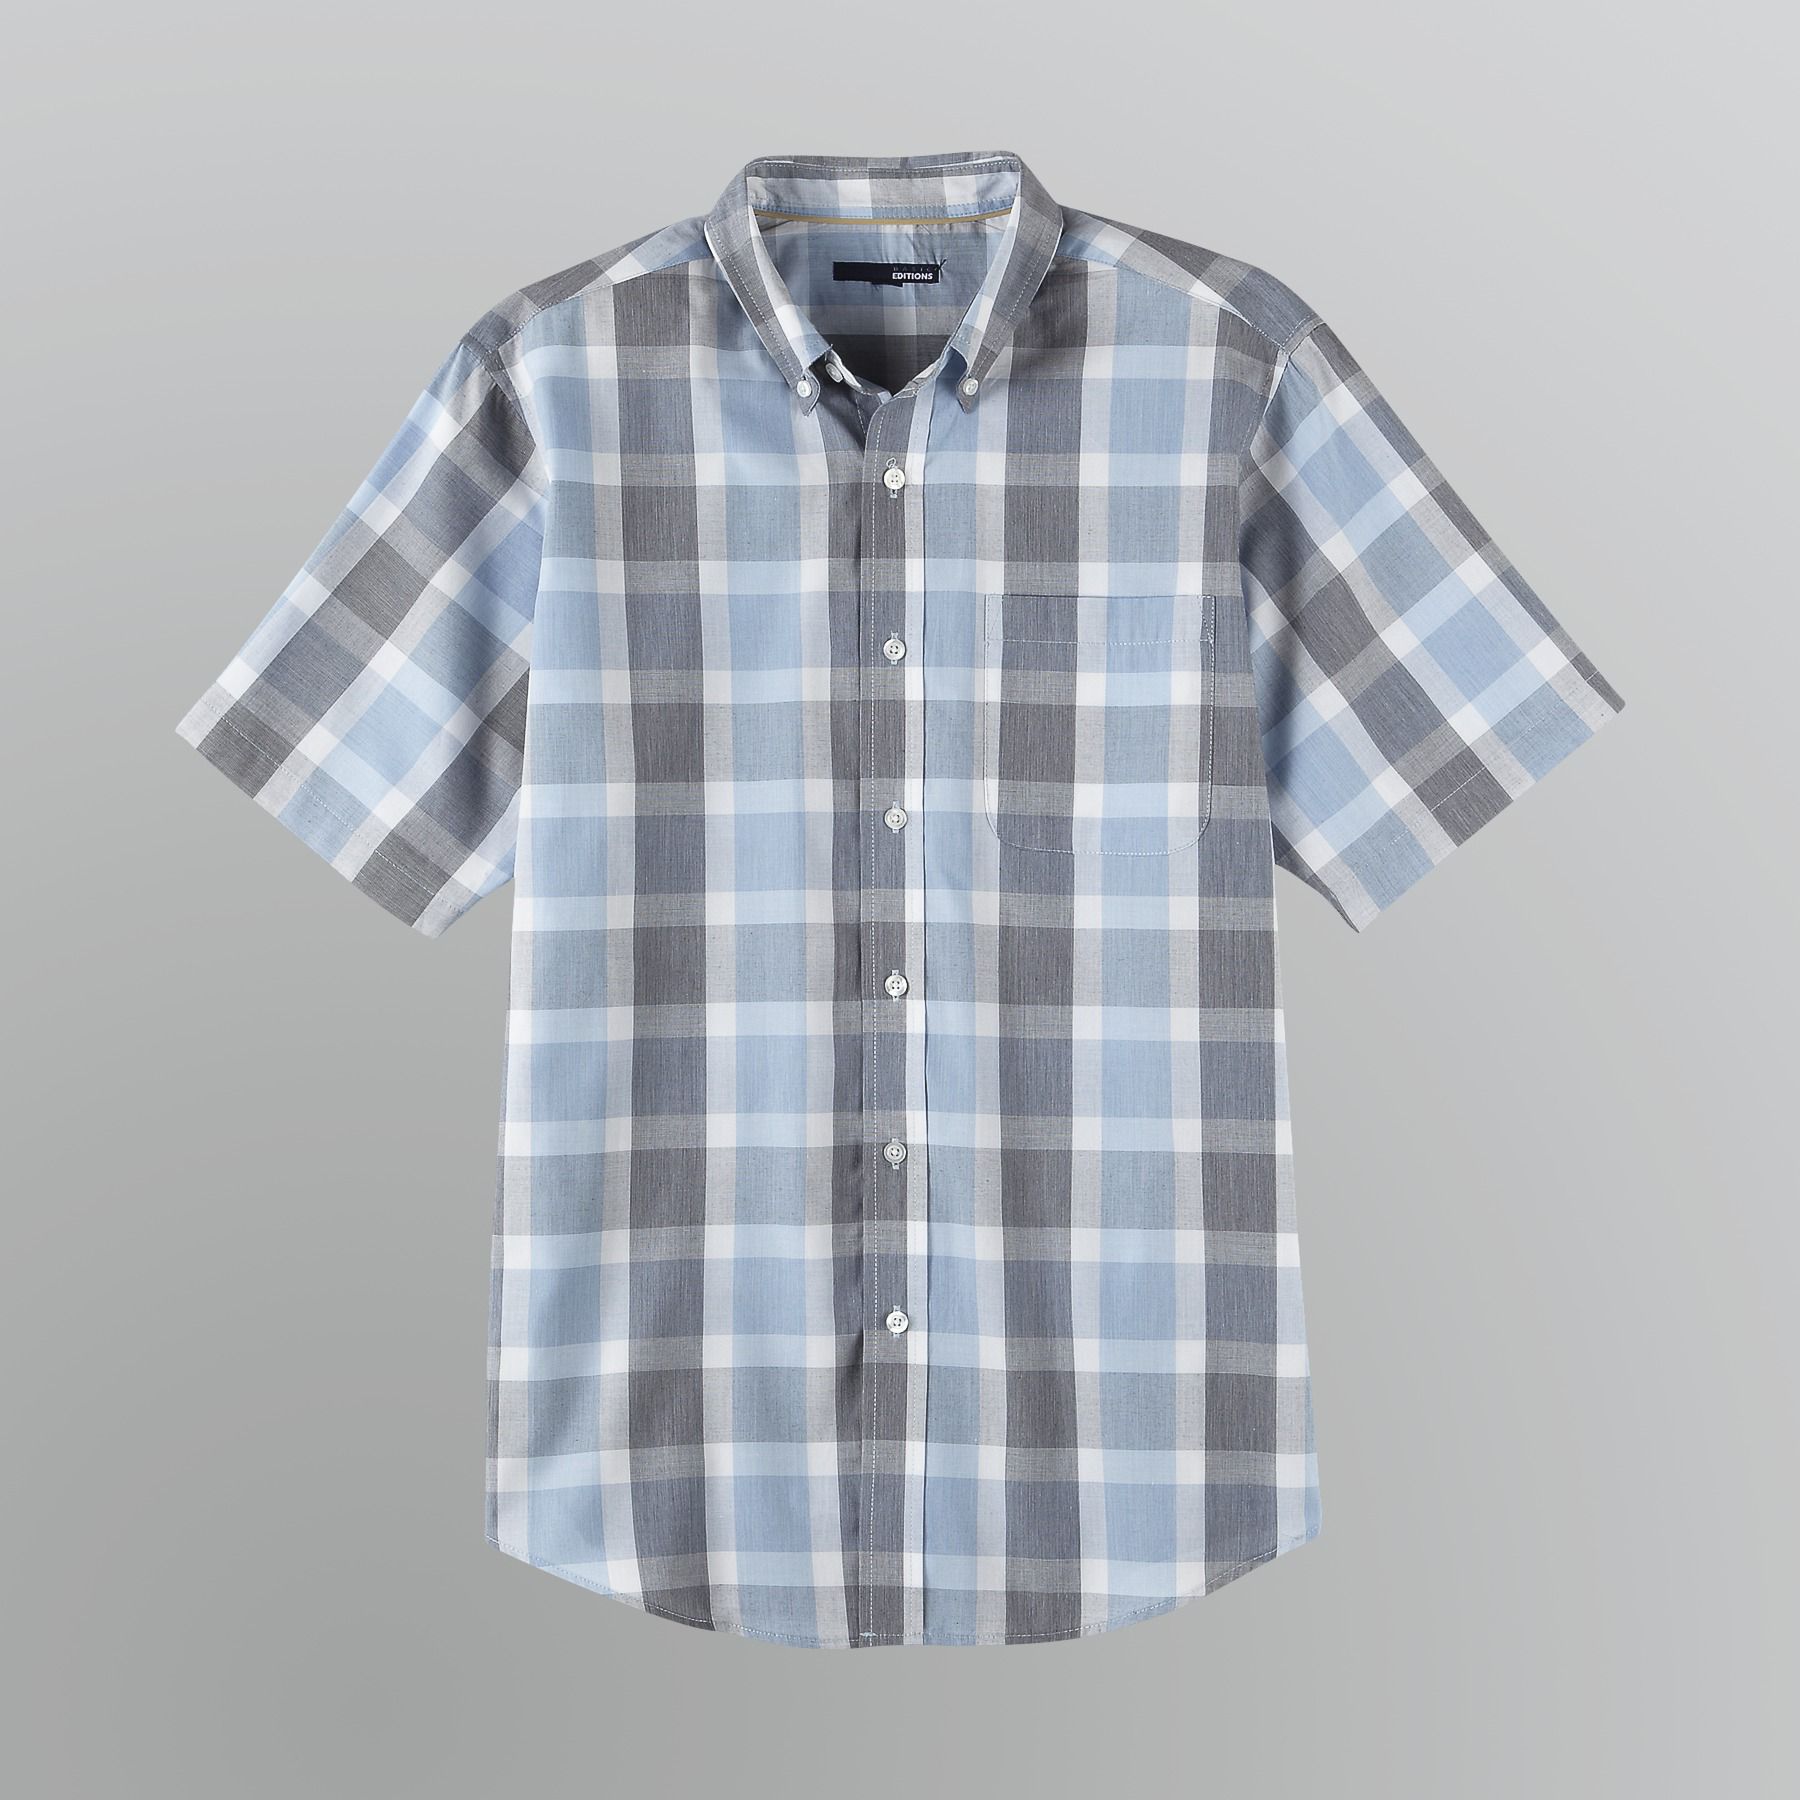 Basic Editions Men's Short Sleeve Button-Front Shirt